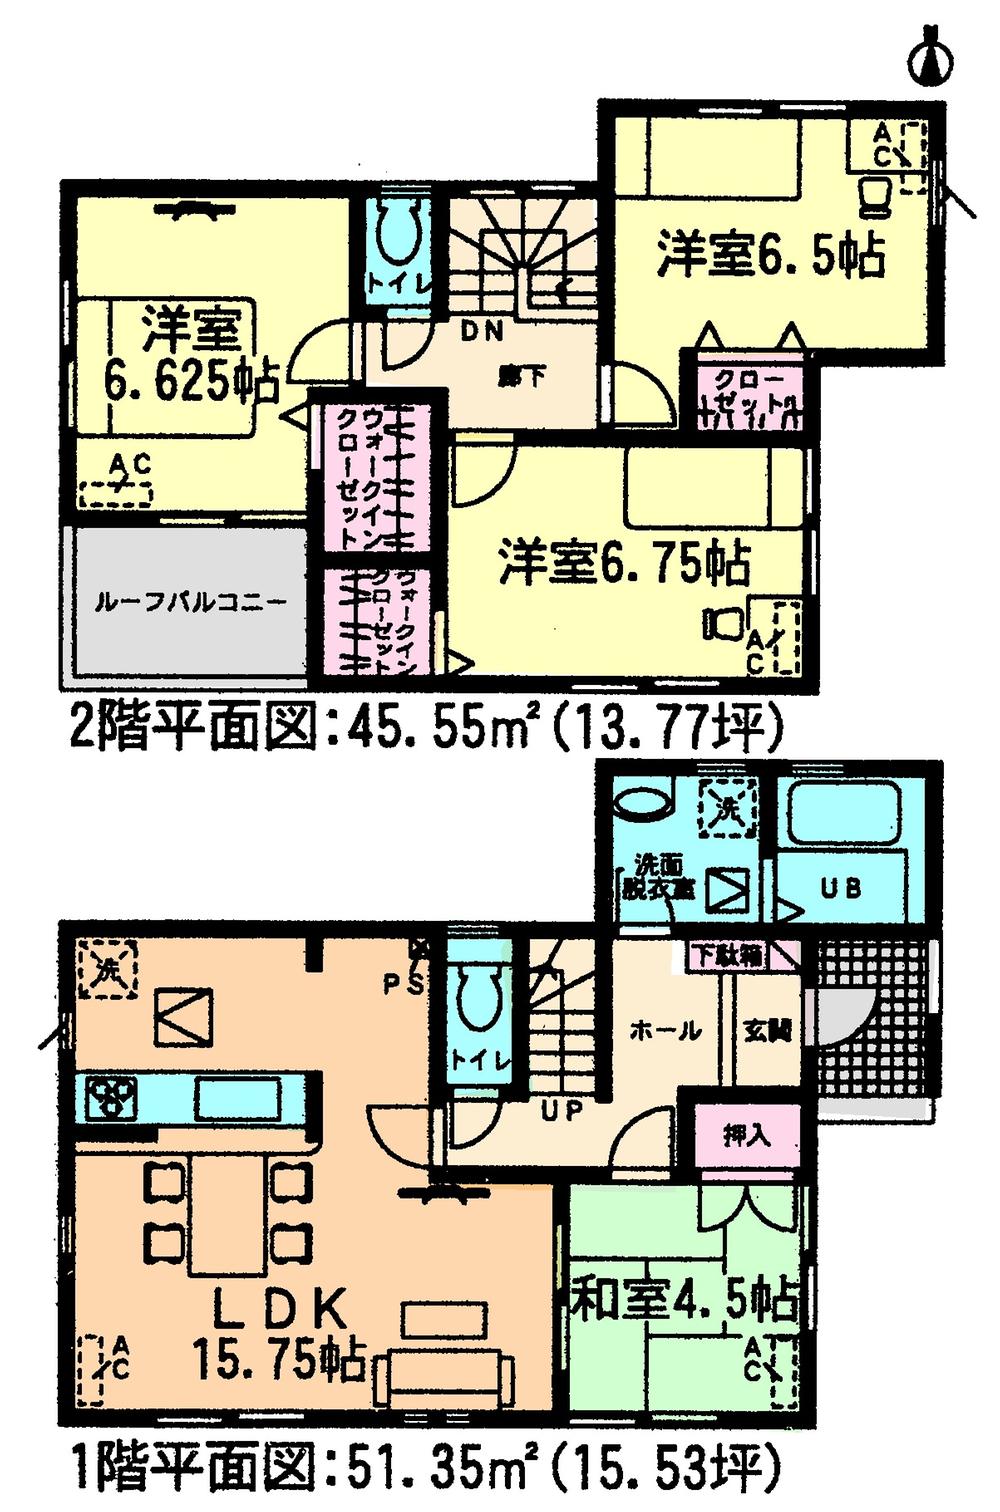 Floor plan. (11 Building), Price 17,900,000 yen, 4LDK, Land area 157.49 sq m , Building area 96.9 sq m